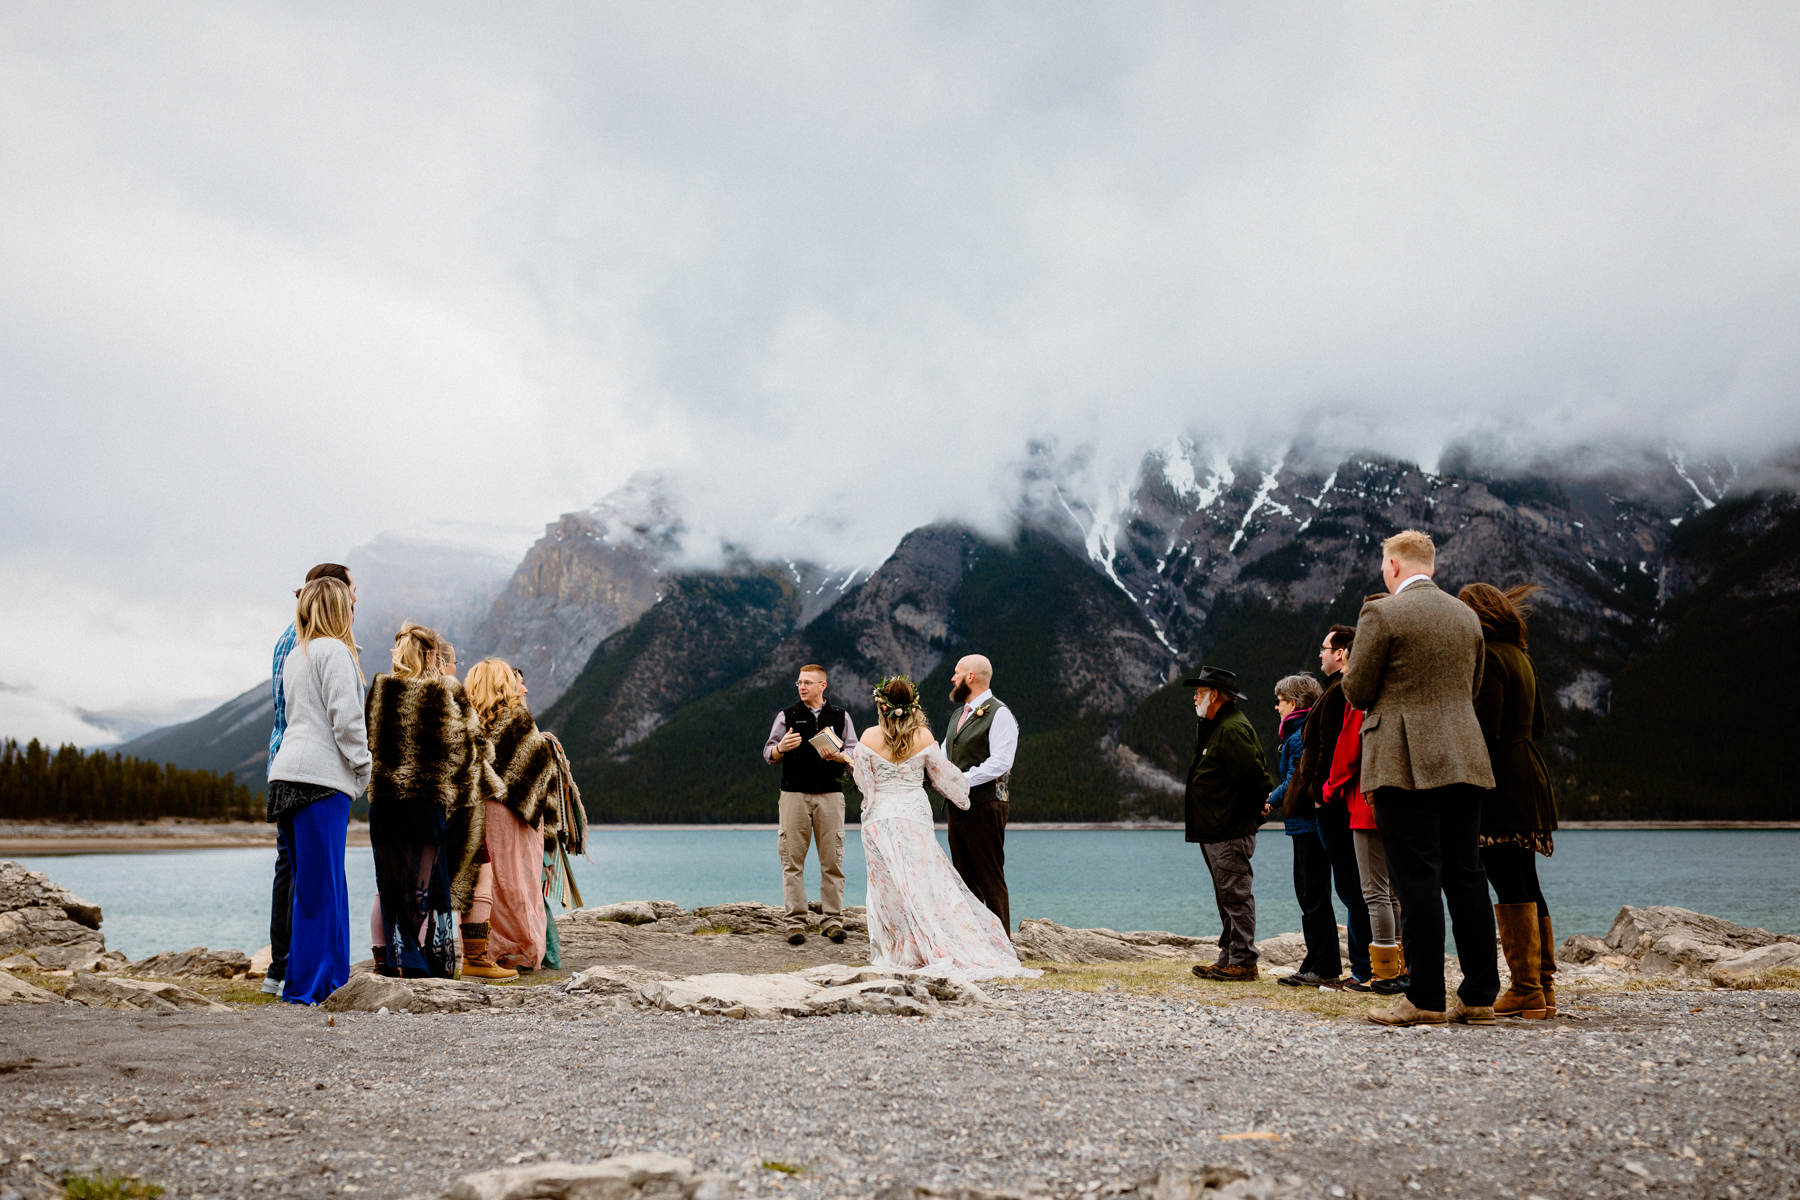 Stormy and Rainy Banff Wedding Photography - Photo 8